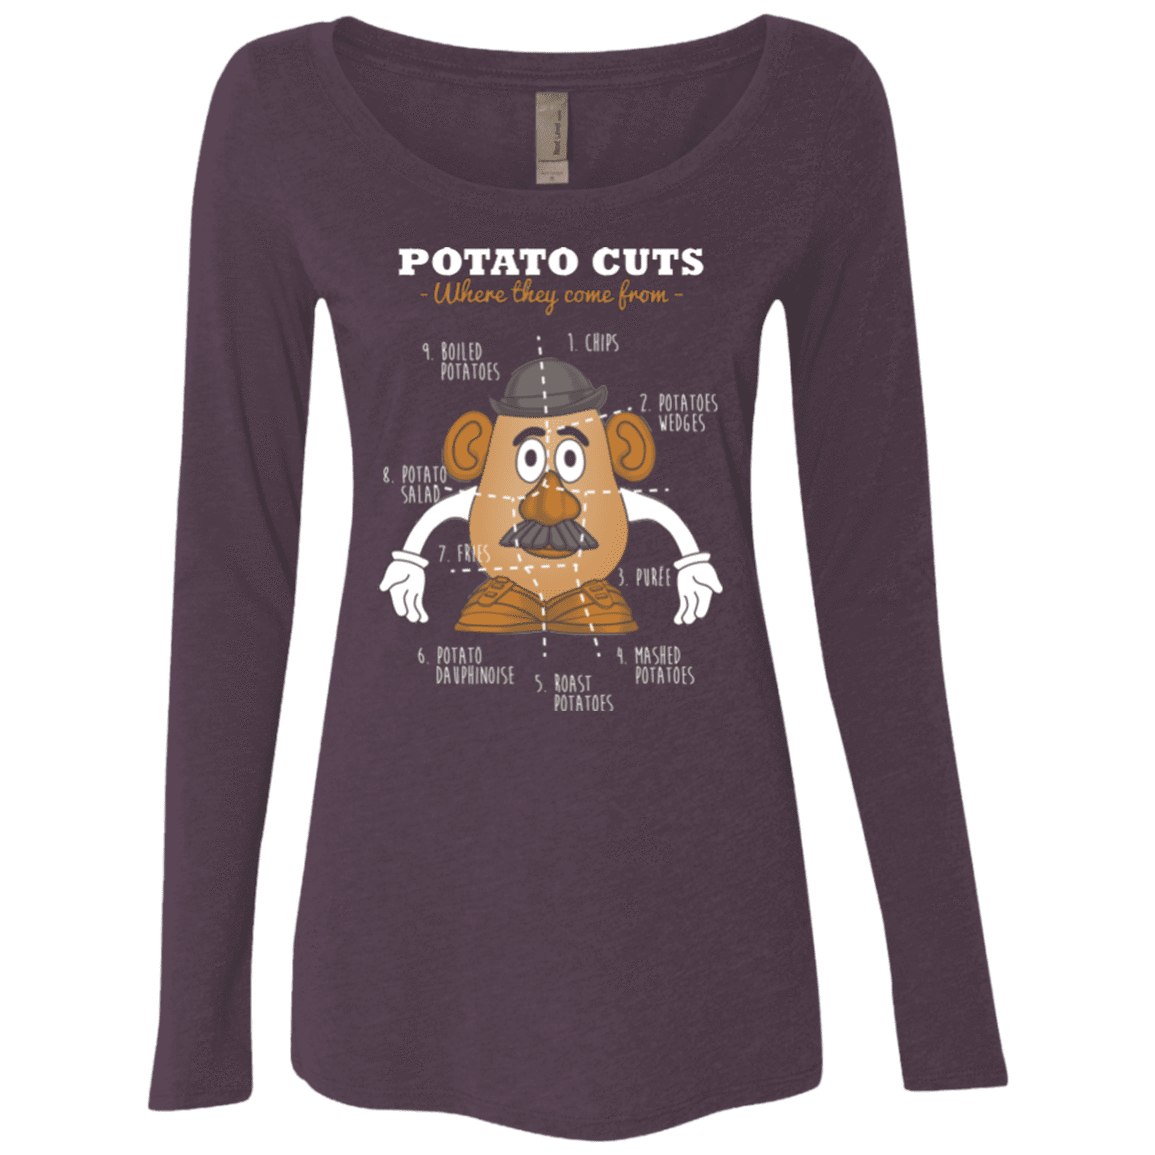 T-Shirts Vintage Purple / Small A Potato Anatomy Women's Triblend Long Sleeve Shirt